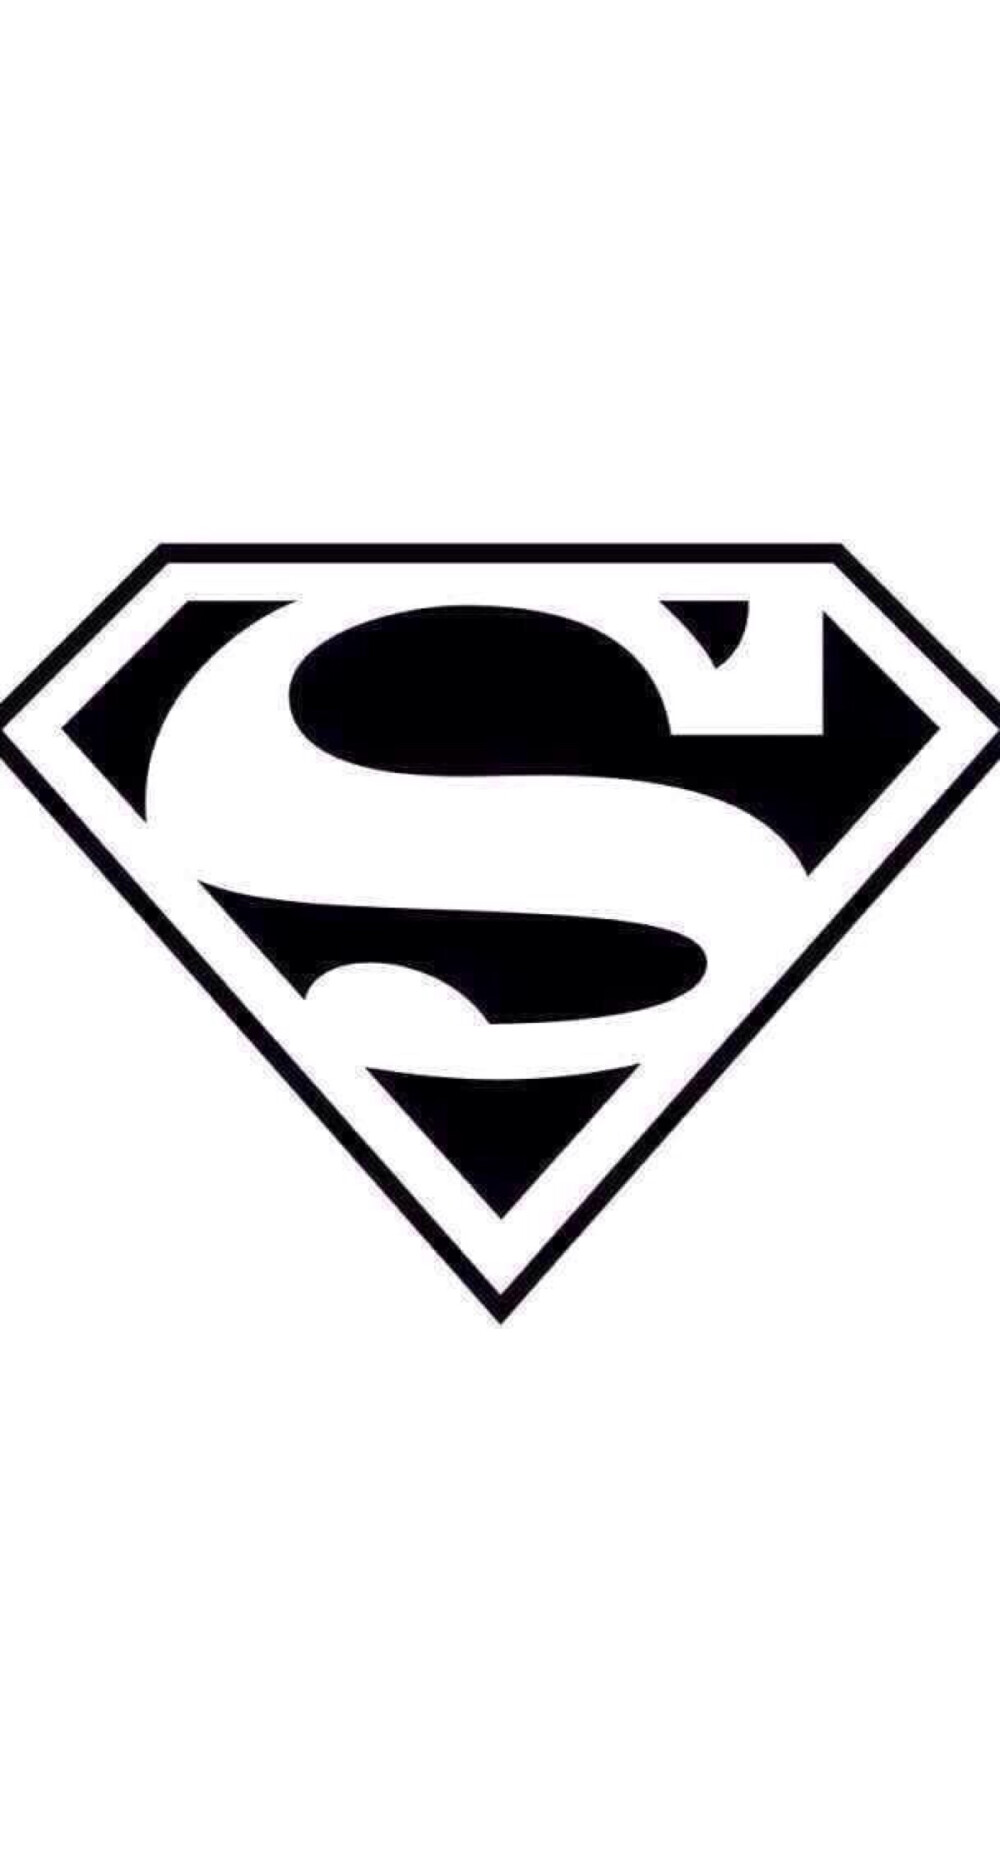 superman花样字母昵称图片